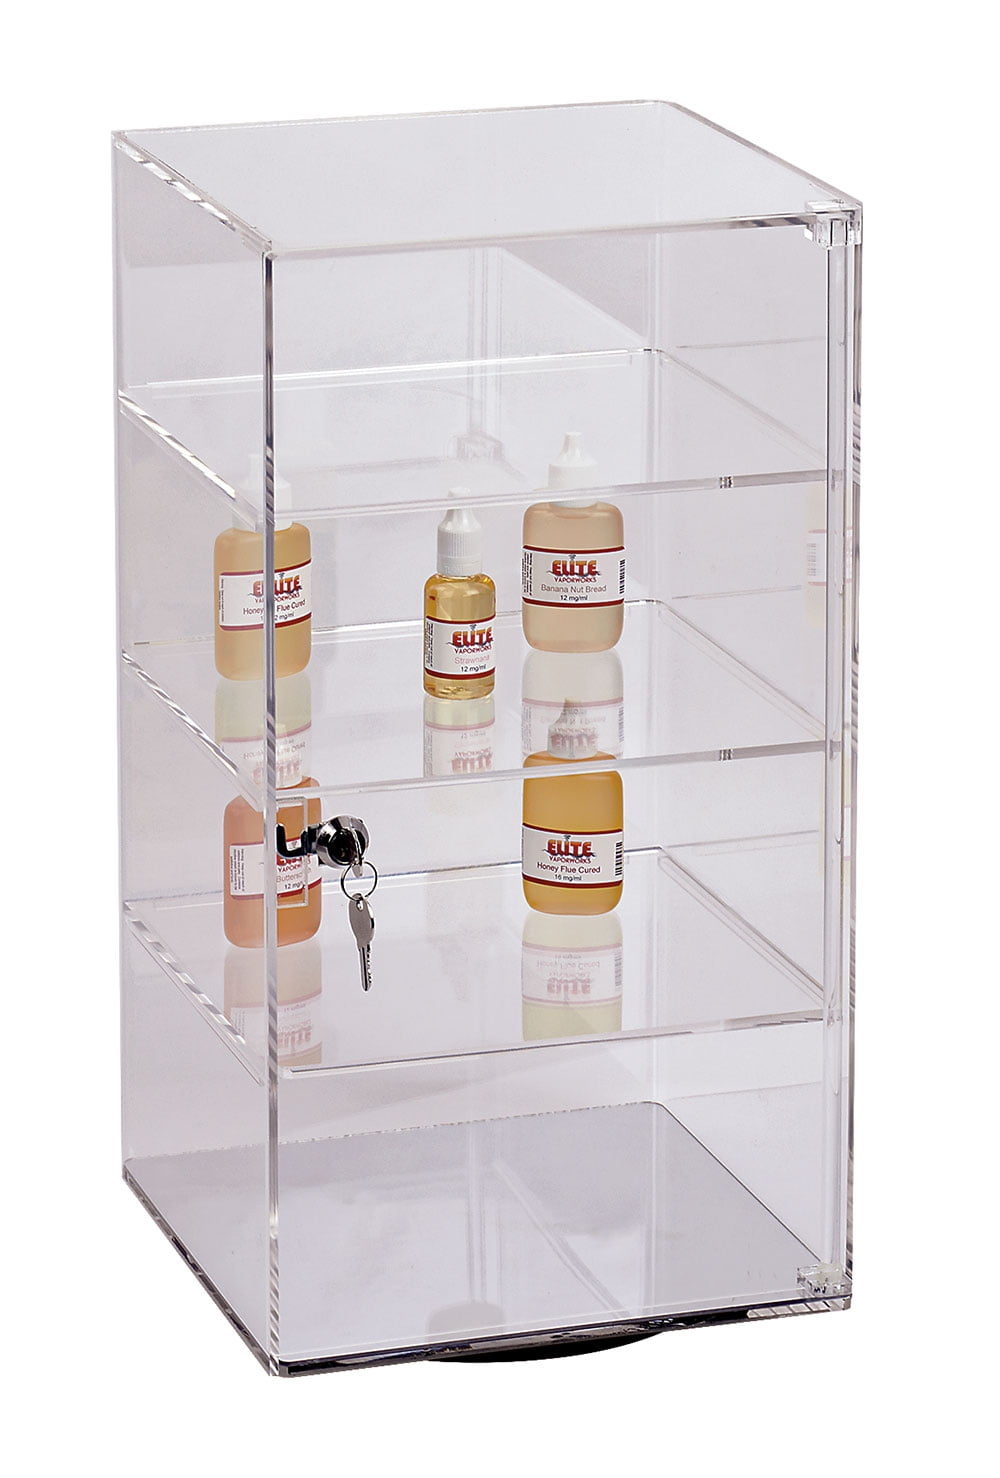 Acrylic Counter top Display Case 16" x 4" x 16"h Show Case Cabinet Shelves 